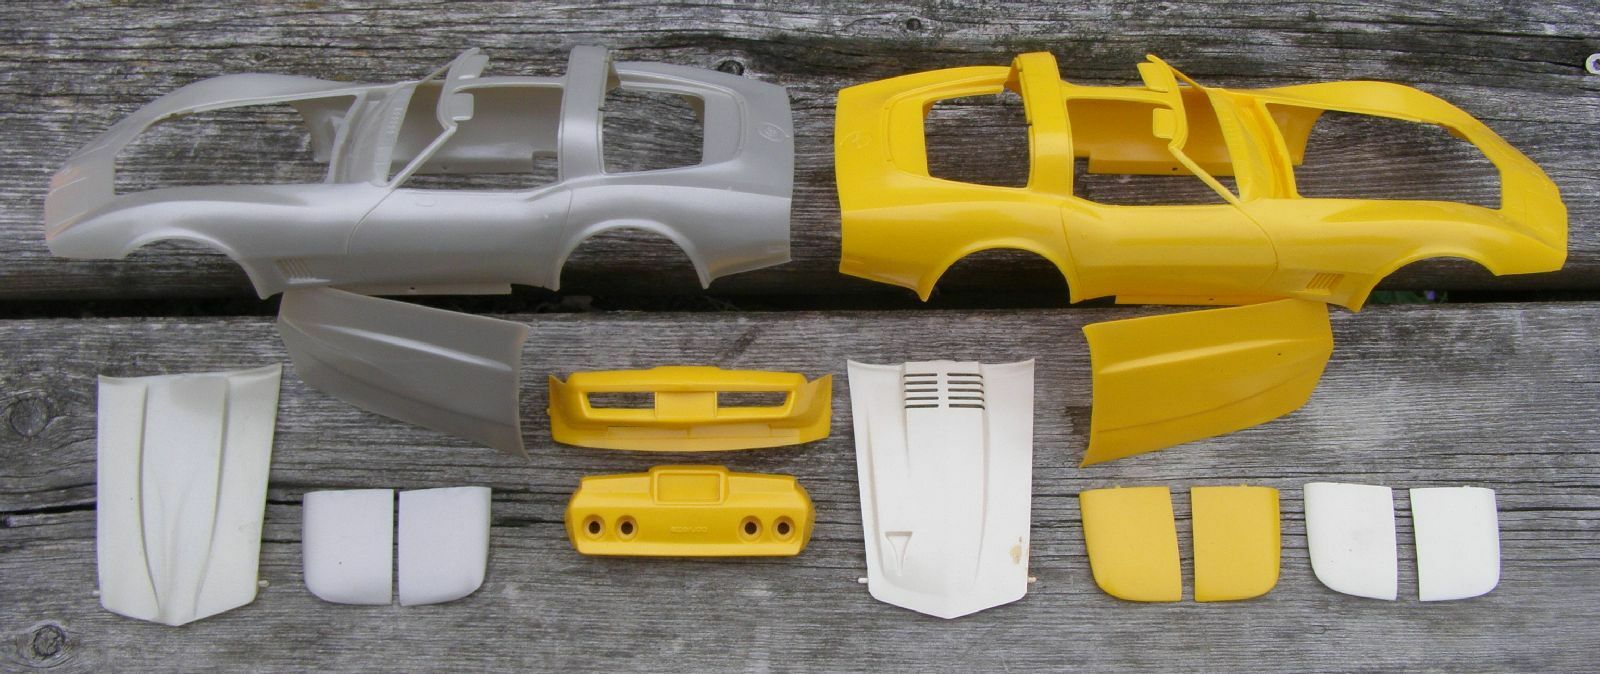 1/20 Monogram Corvette  Junk Yard Bodies Hoods Windows Junkyard Chevrolet 1980?